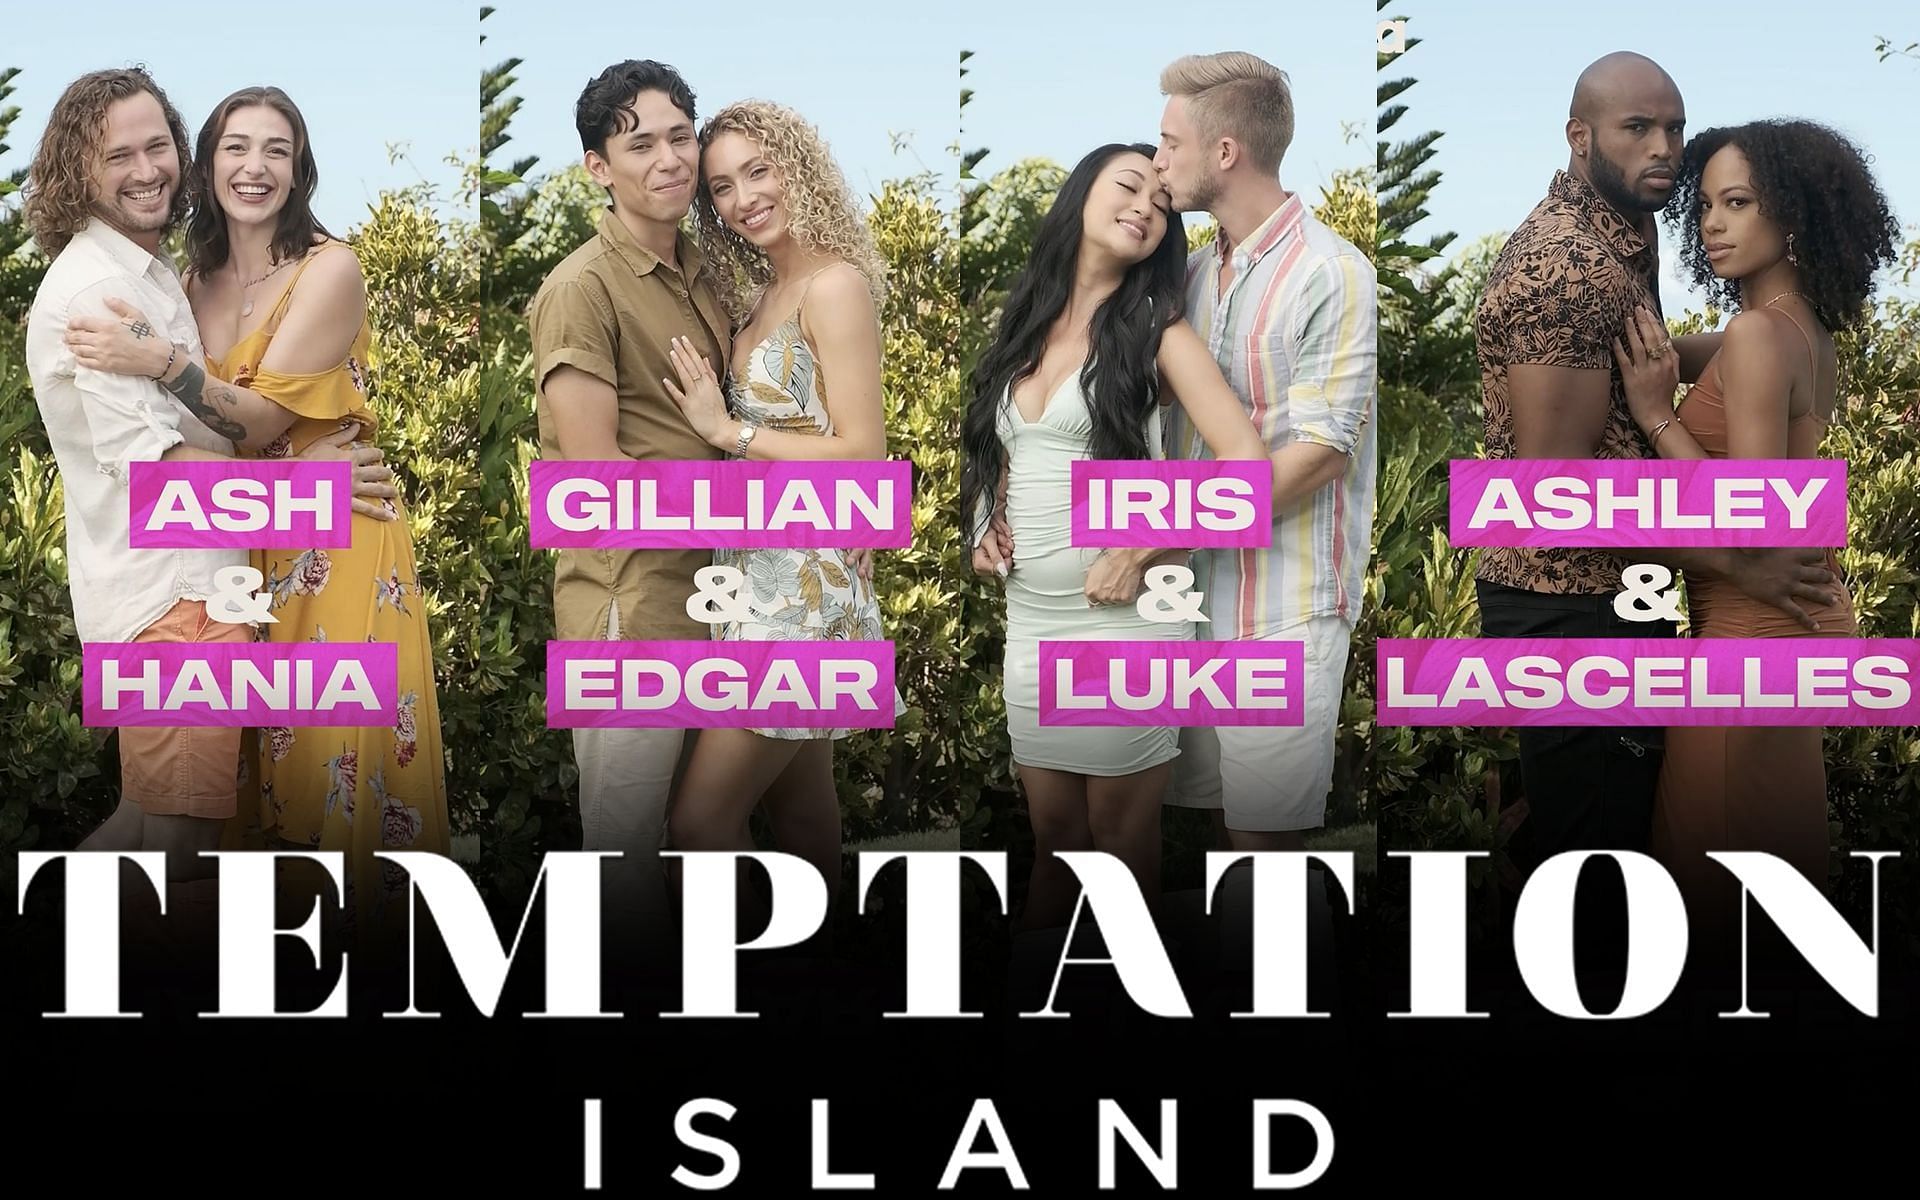 Four couples to participate in Temptation Island season 4 starting March 16 (Image via Sportskeeda)